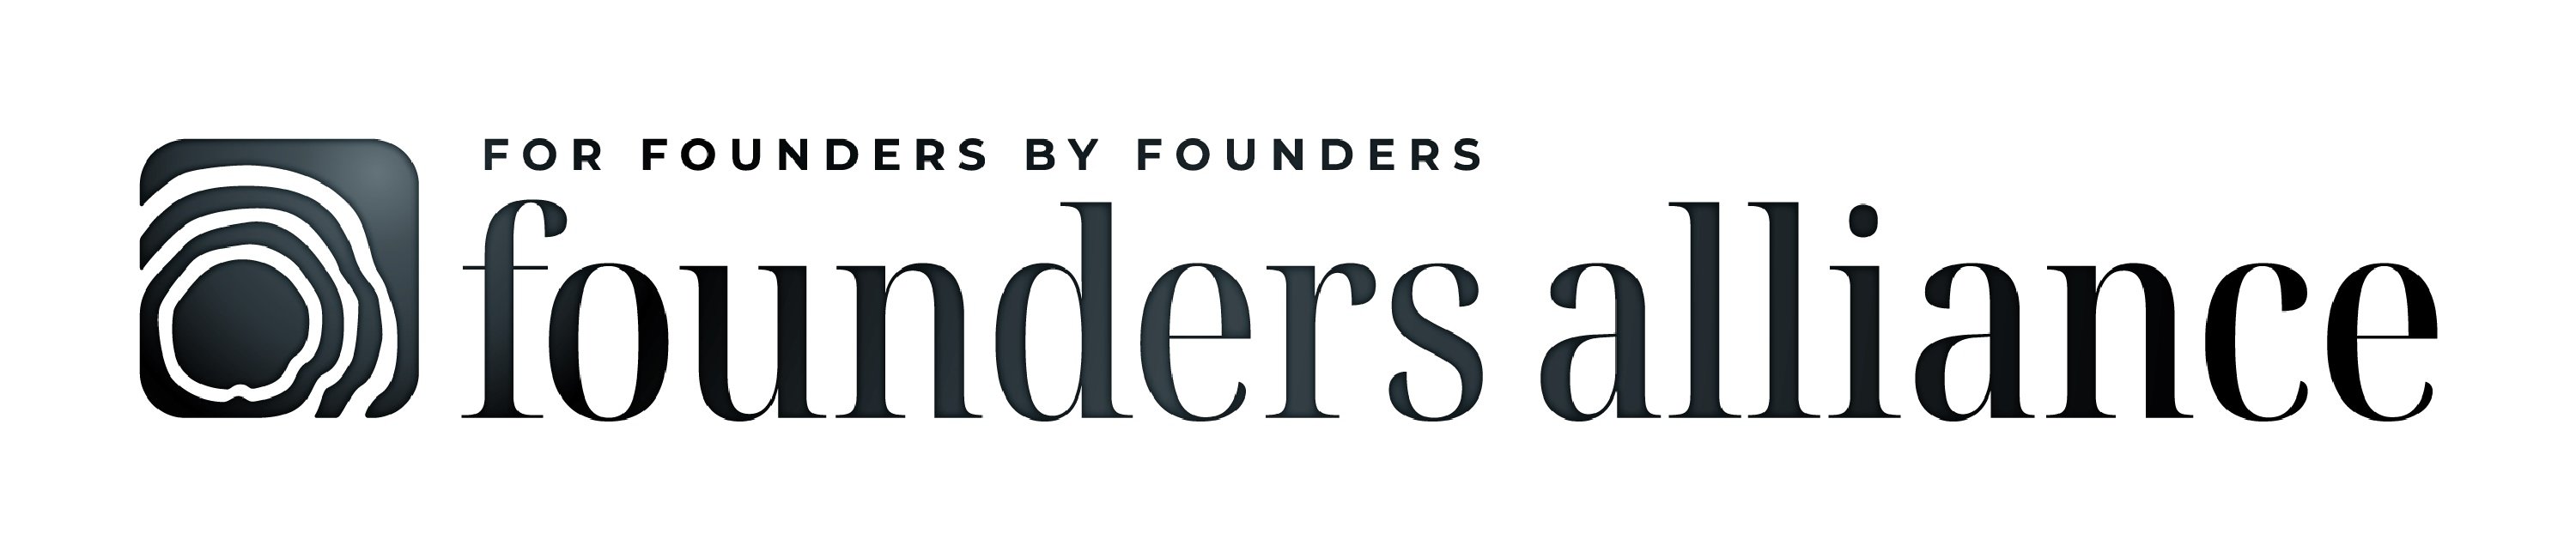 Founders Alliance Logo Black